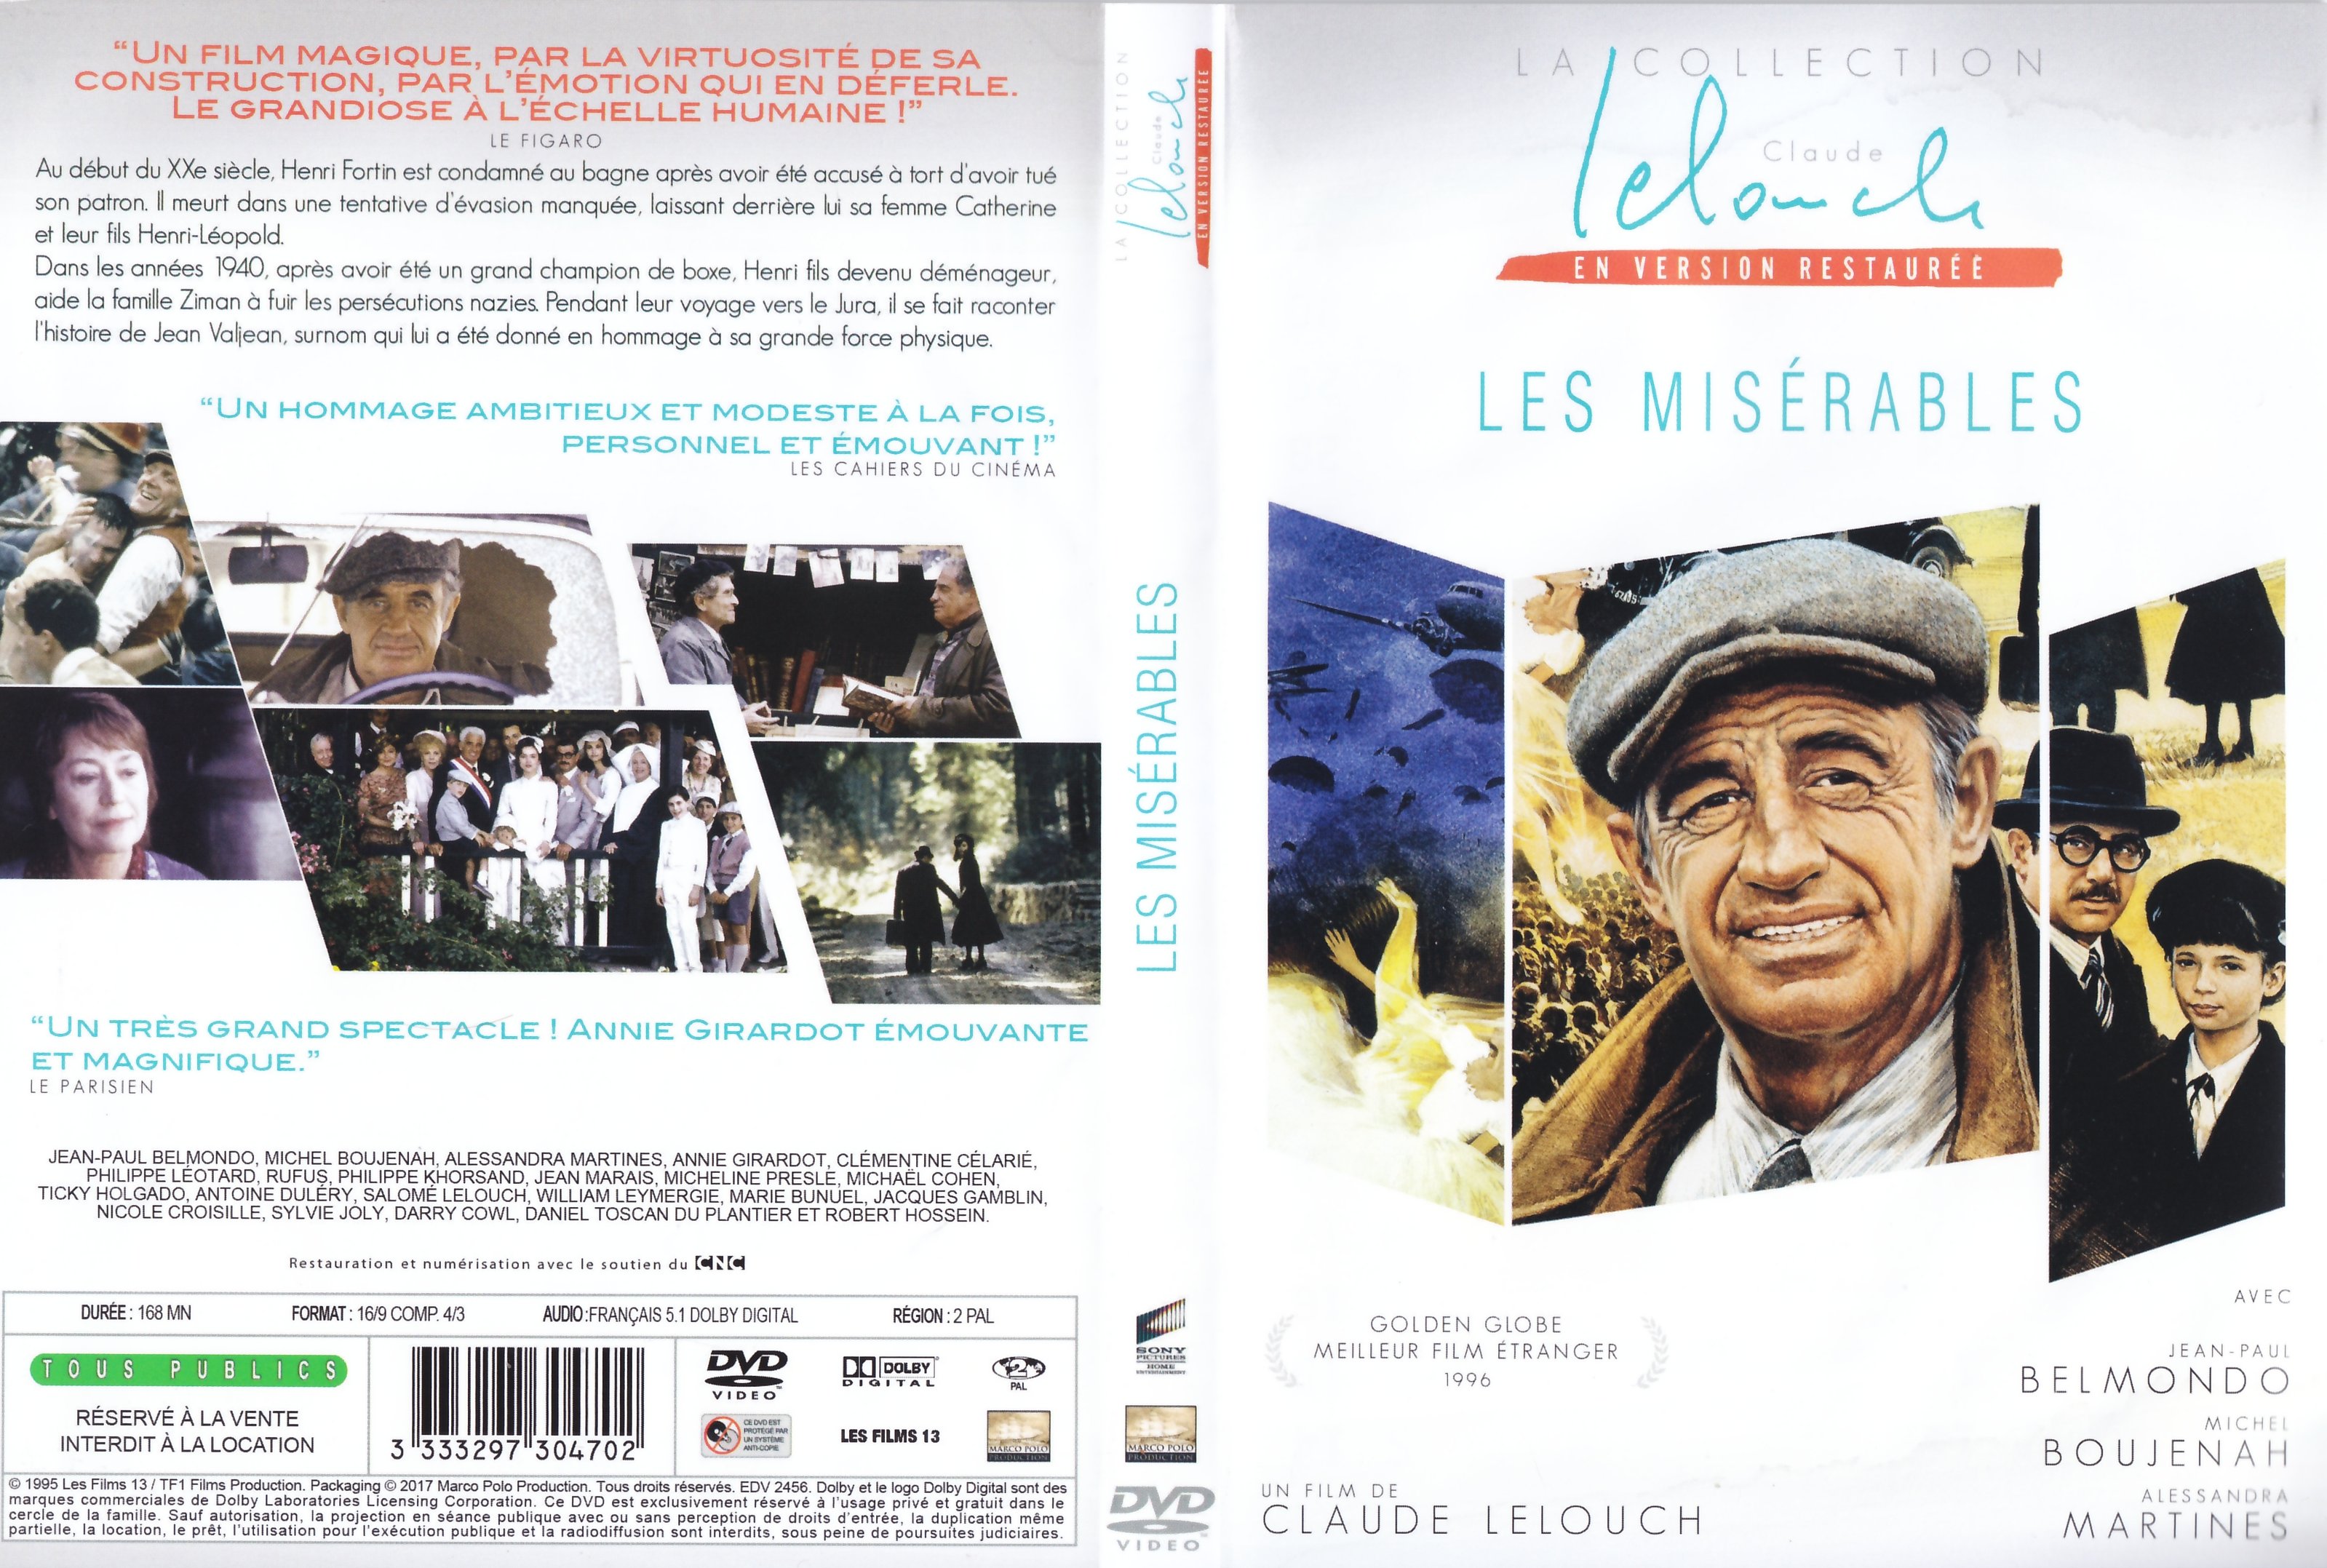 Jaquette DVD Les misrables (Lelouch) v3